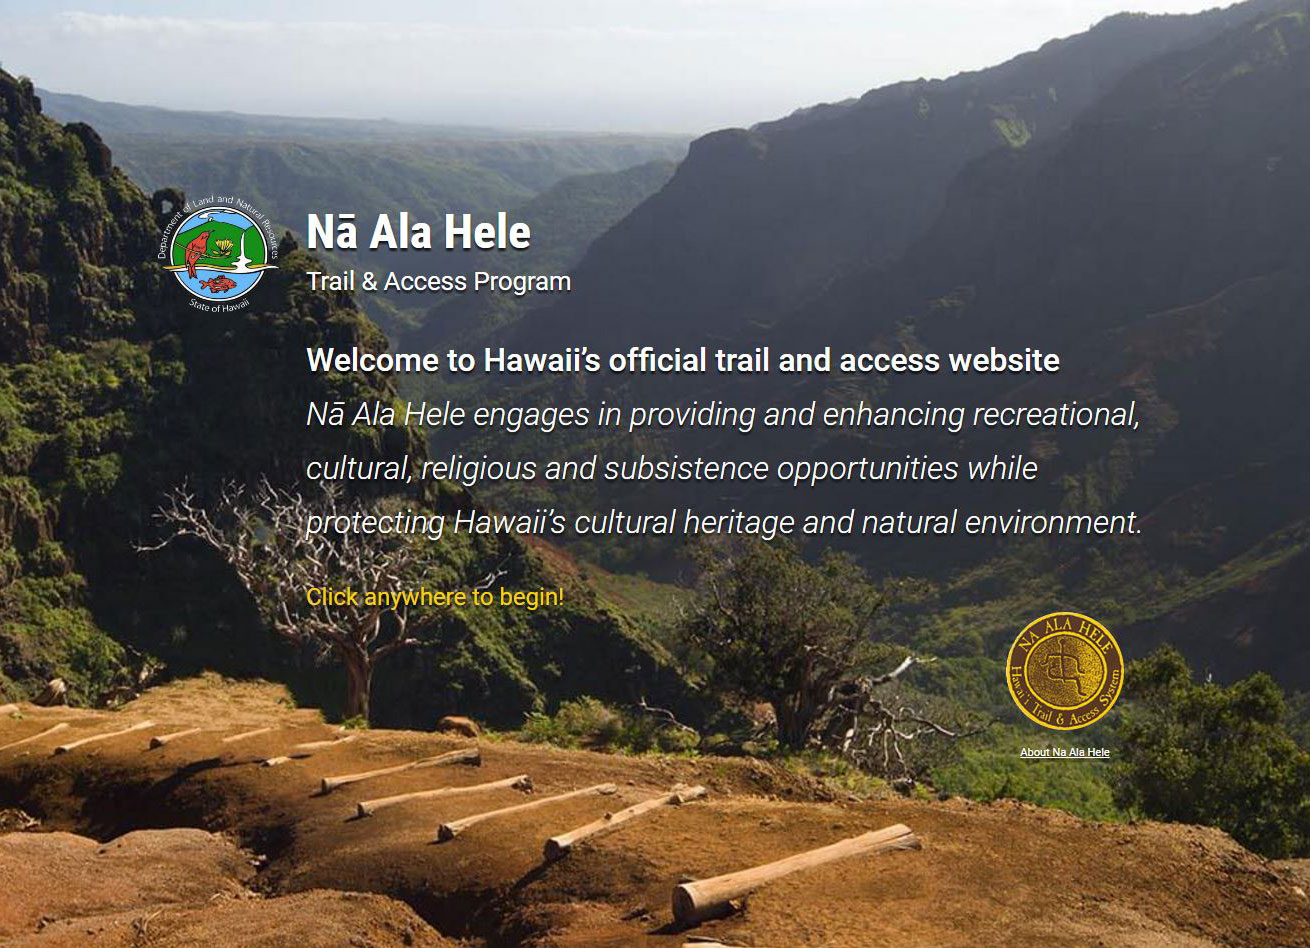 na ala hele trail access program website https://hawaiitrails.org/trails/#/